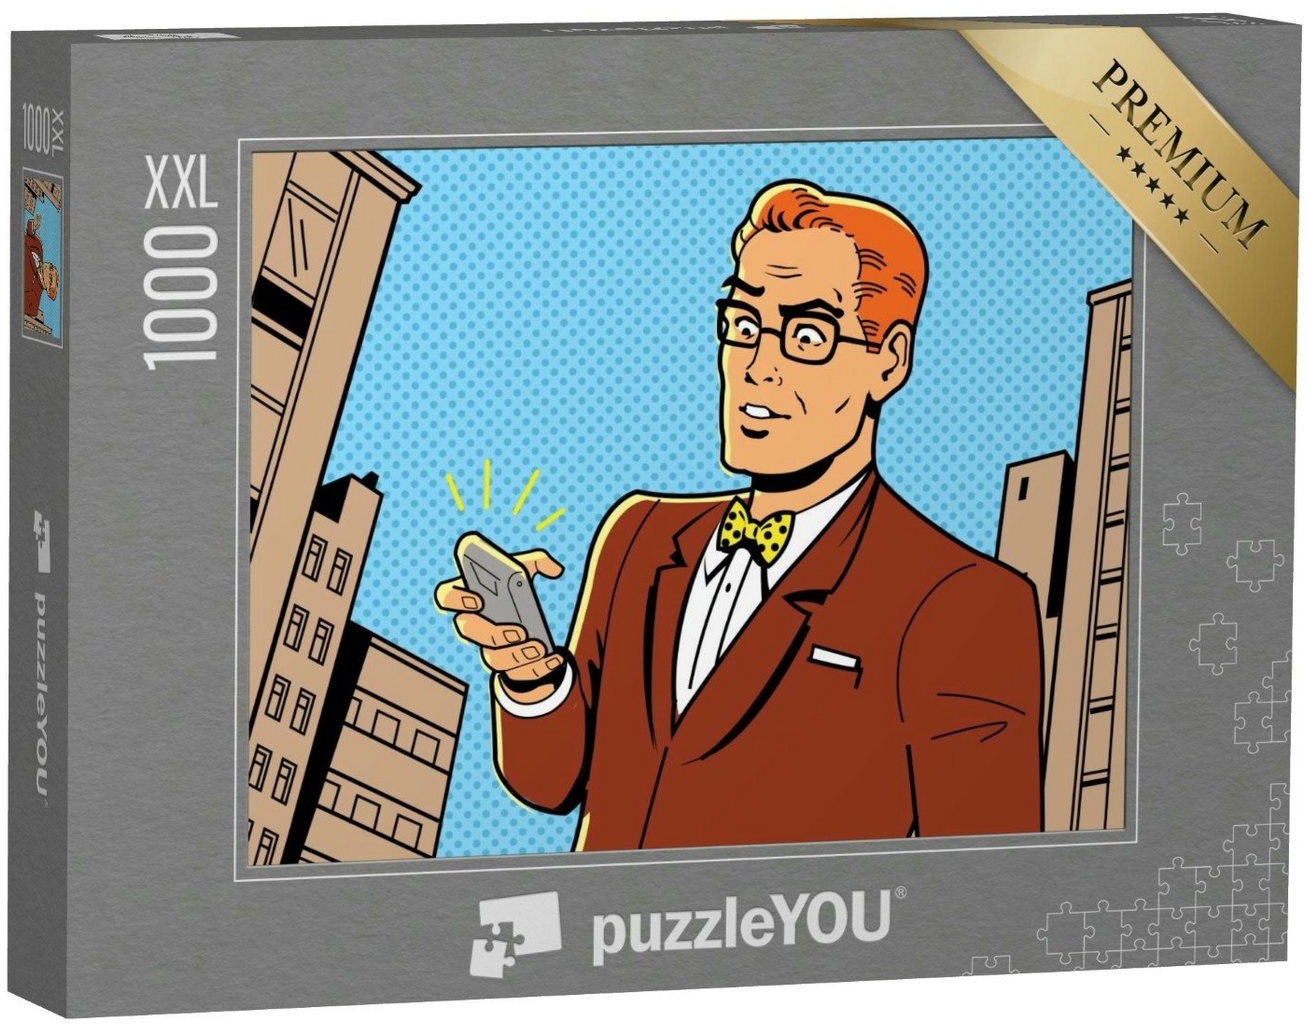 puzzleYOU Puzzle Ironische Illustration: Retro-Mann mit Smartphone, 1000 Puzzleteile, puzzleYOU-Kollektionen Comic